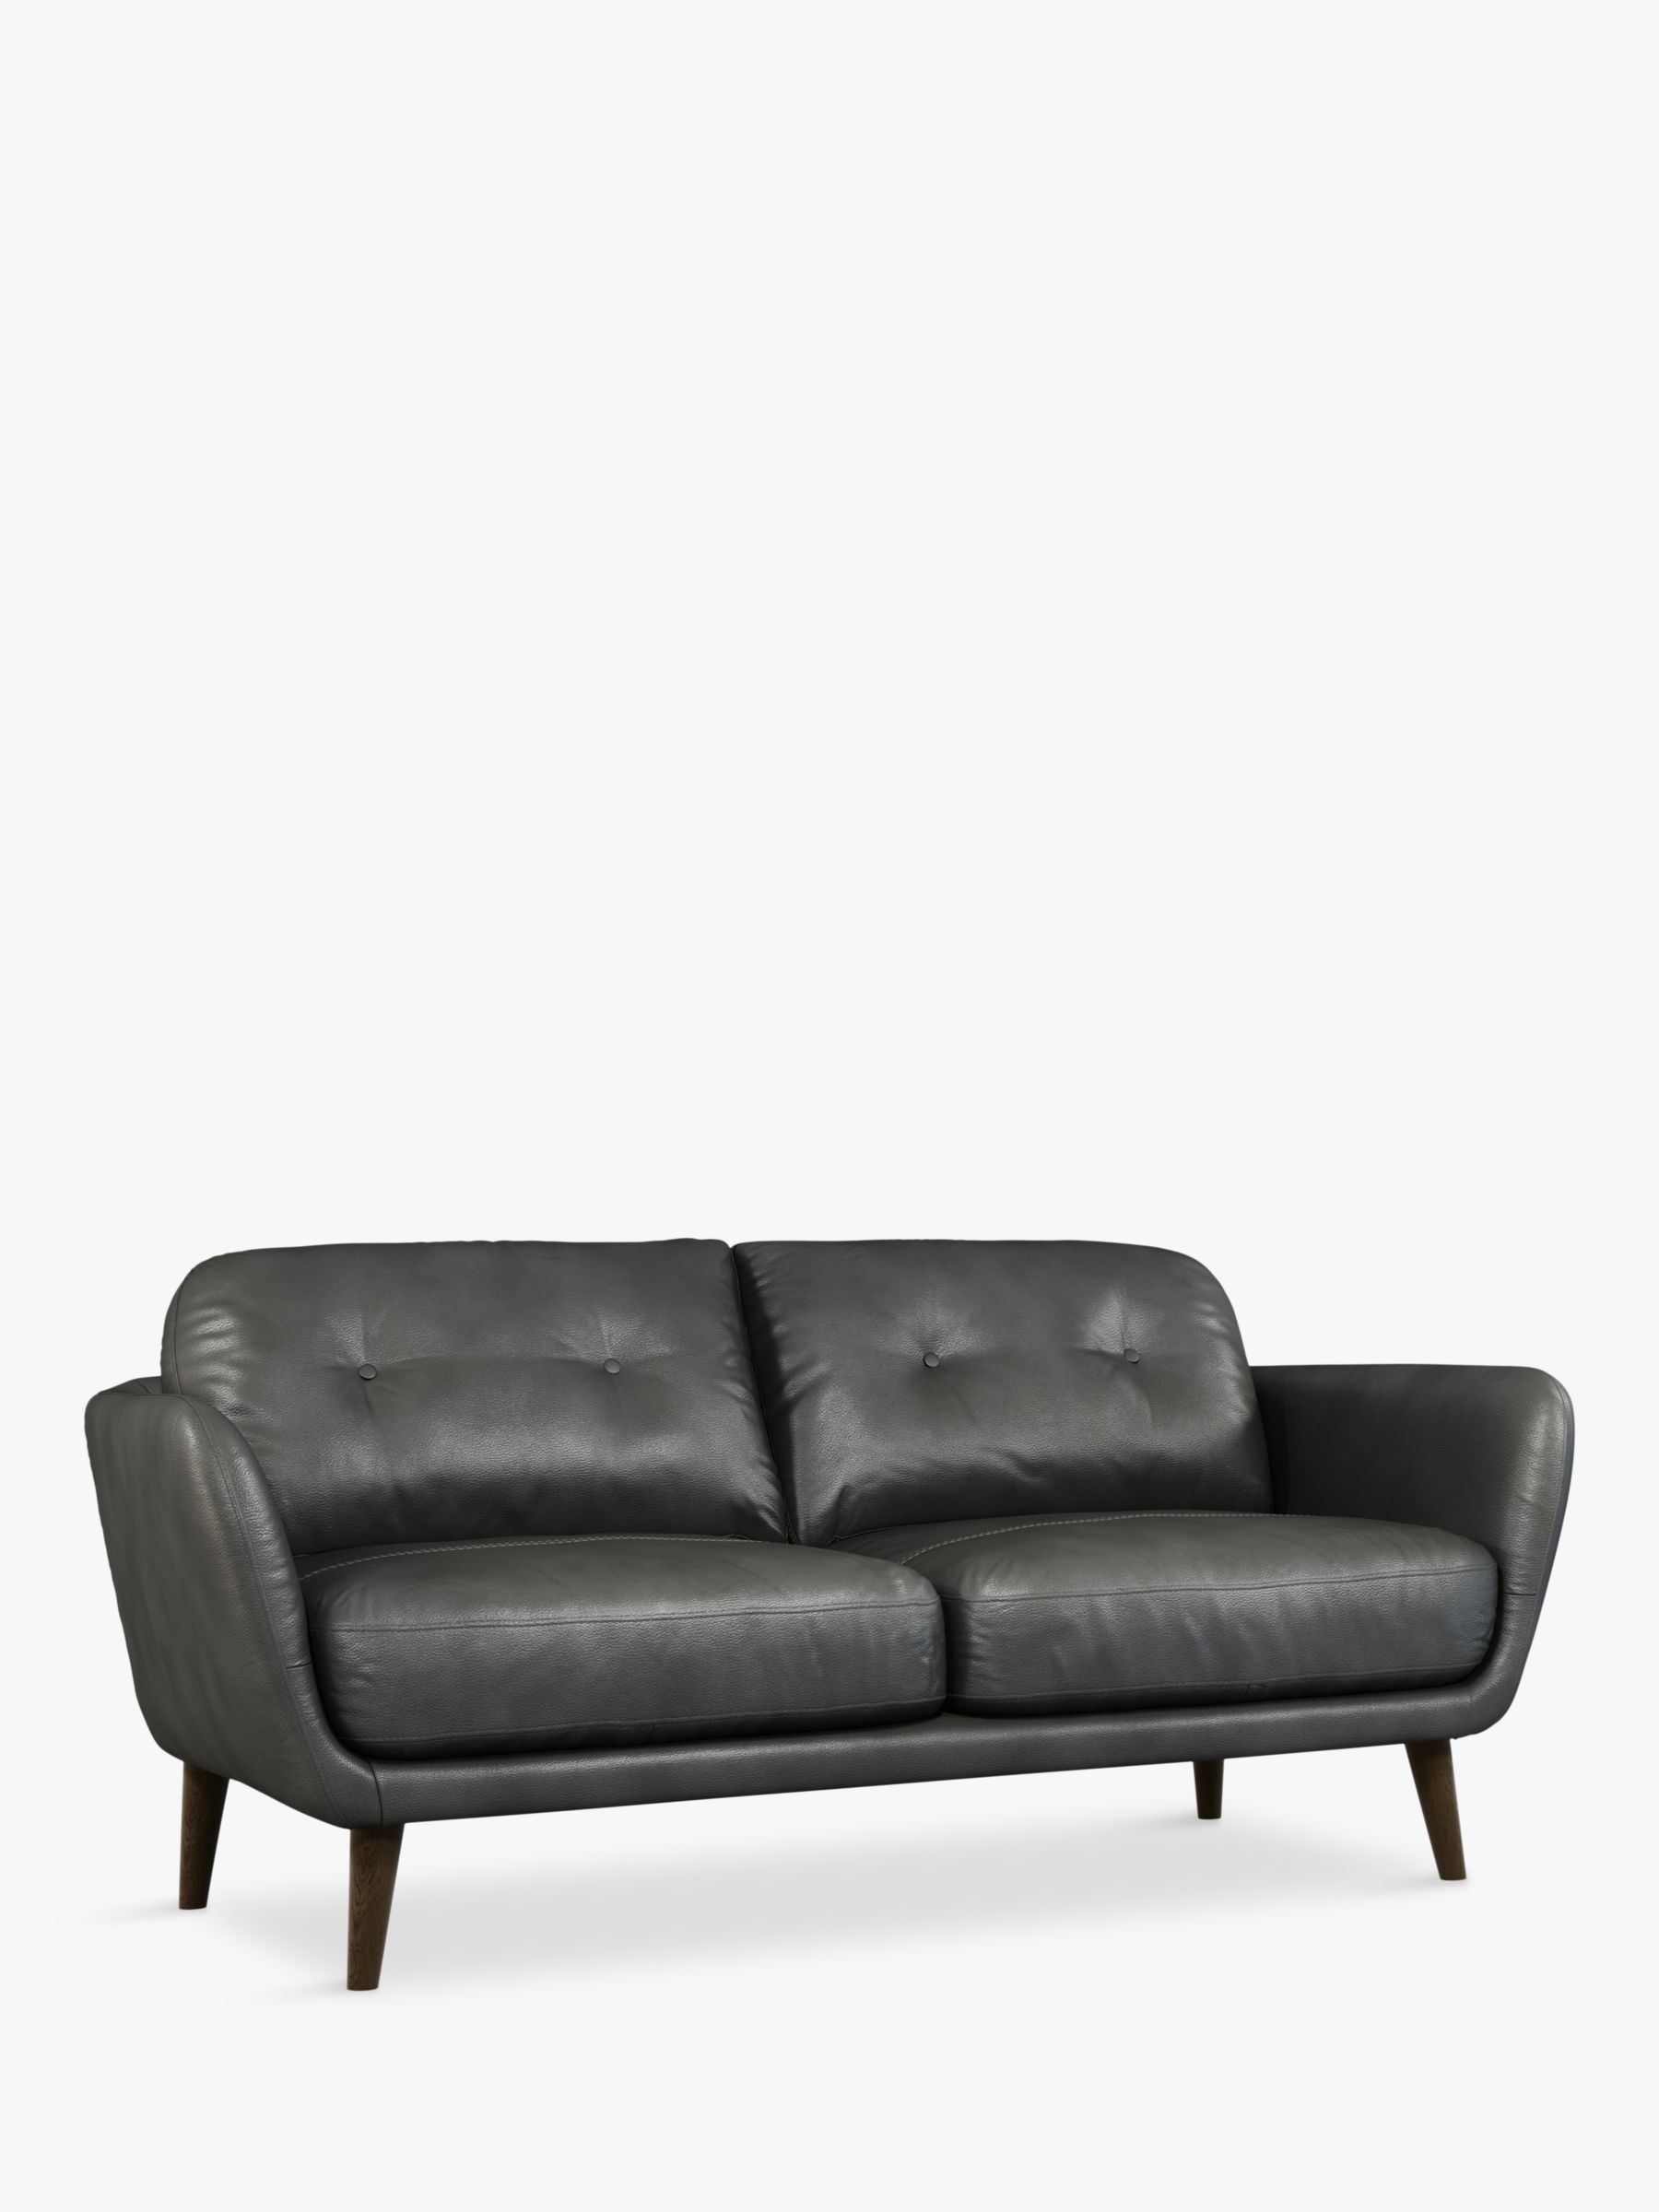 Arlo Range, John Lewis Arlo Medium 2 Seater Leather Sofa, Dark Leg, Winchester Anthracite